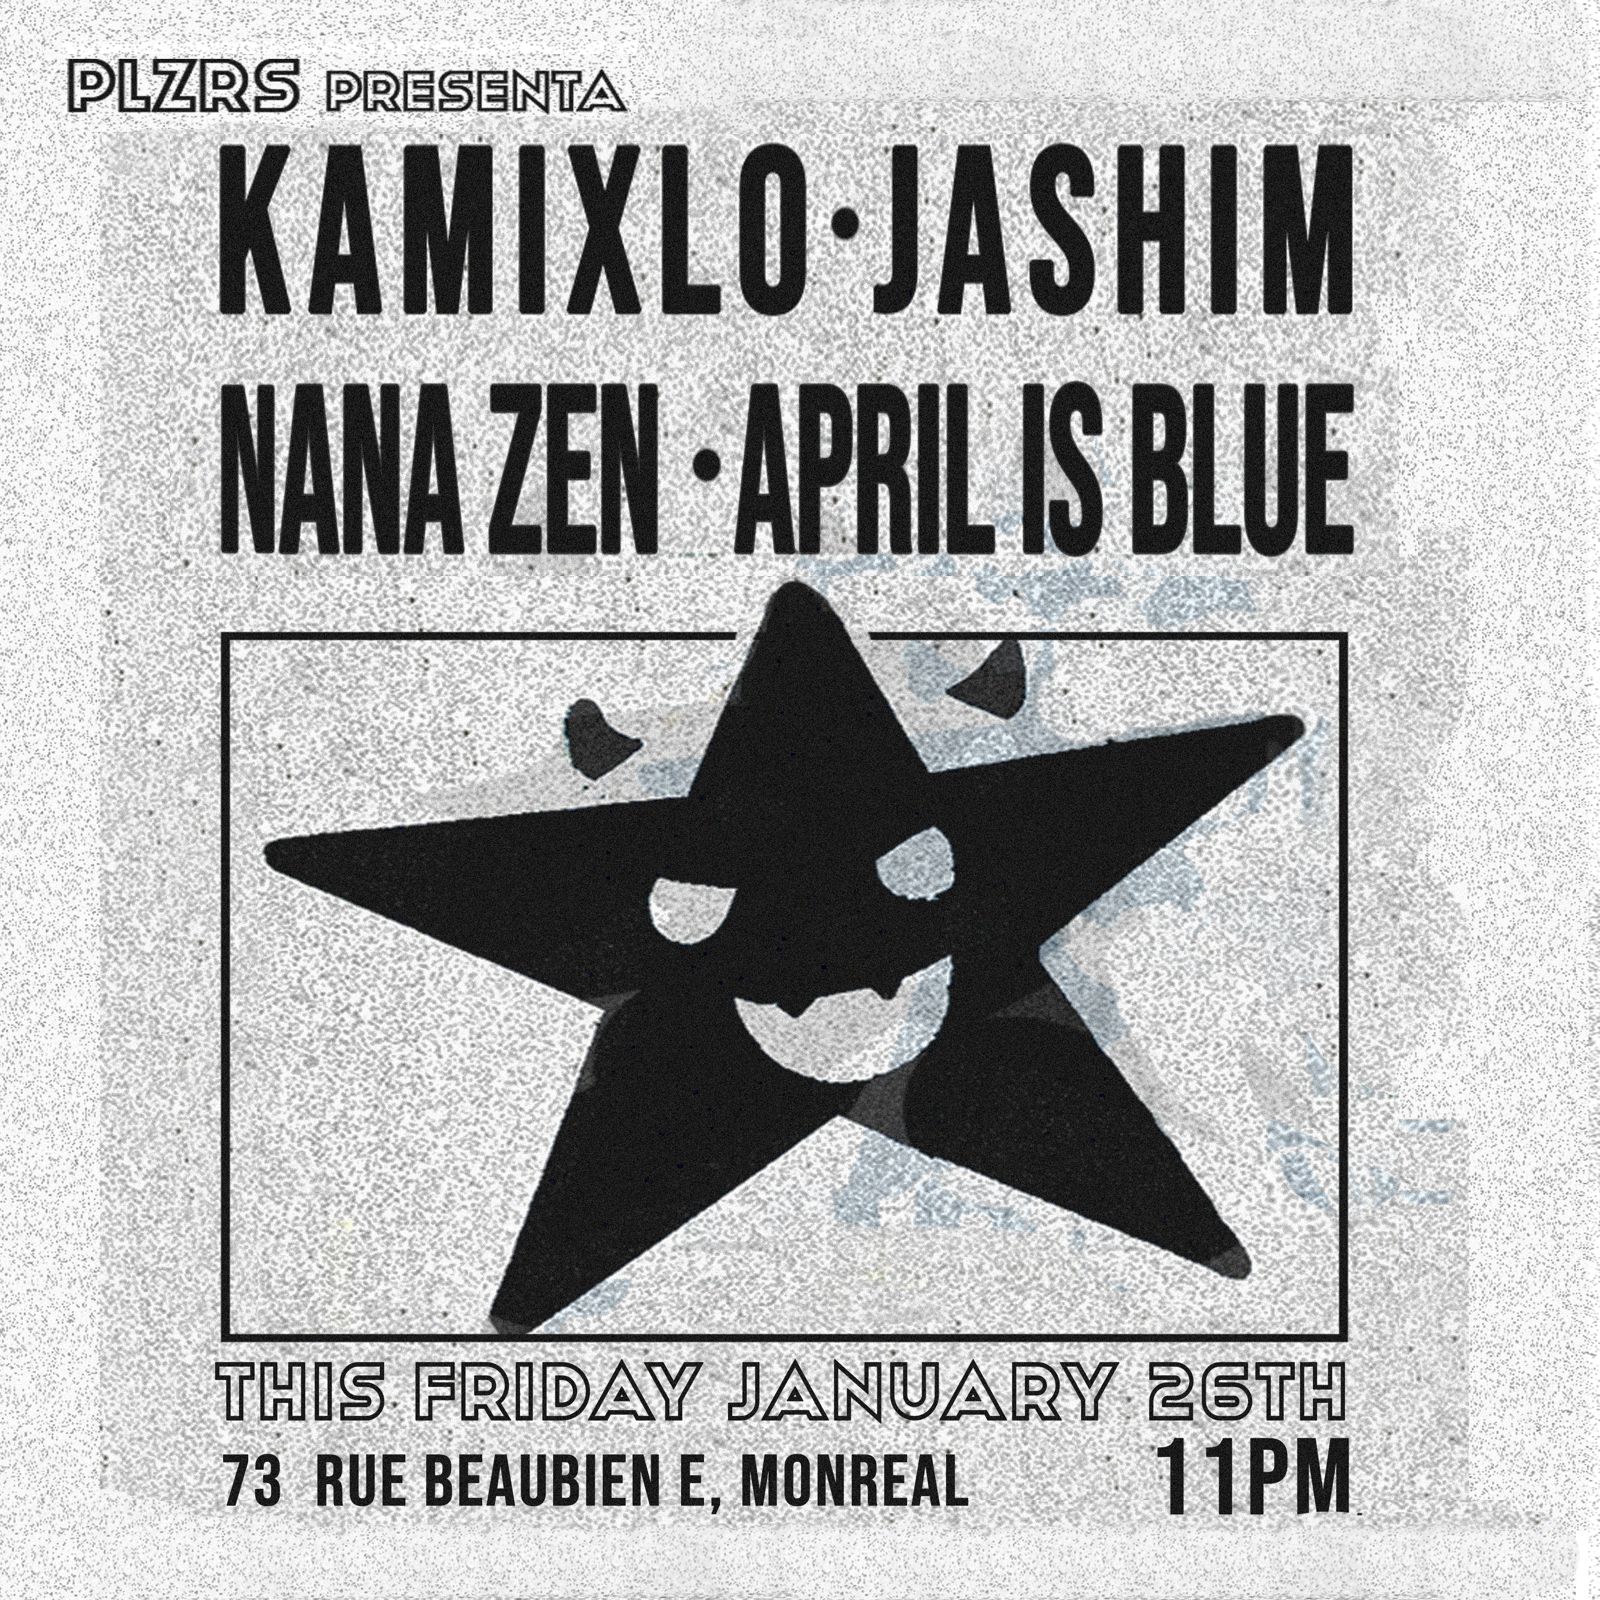 Kamixlo (uk/cl PAN) JASHIM , NANAZEN, april is blue